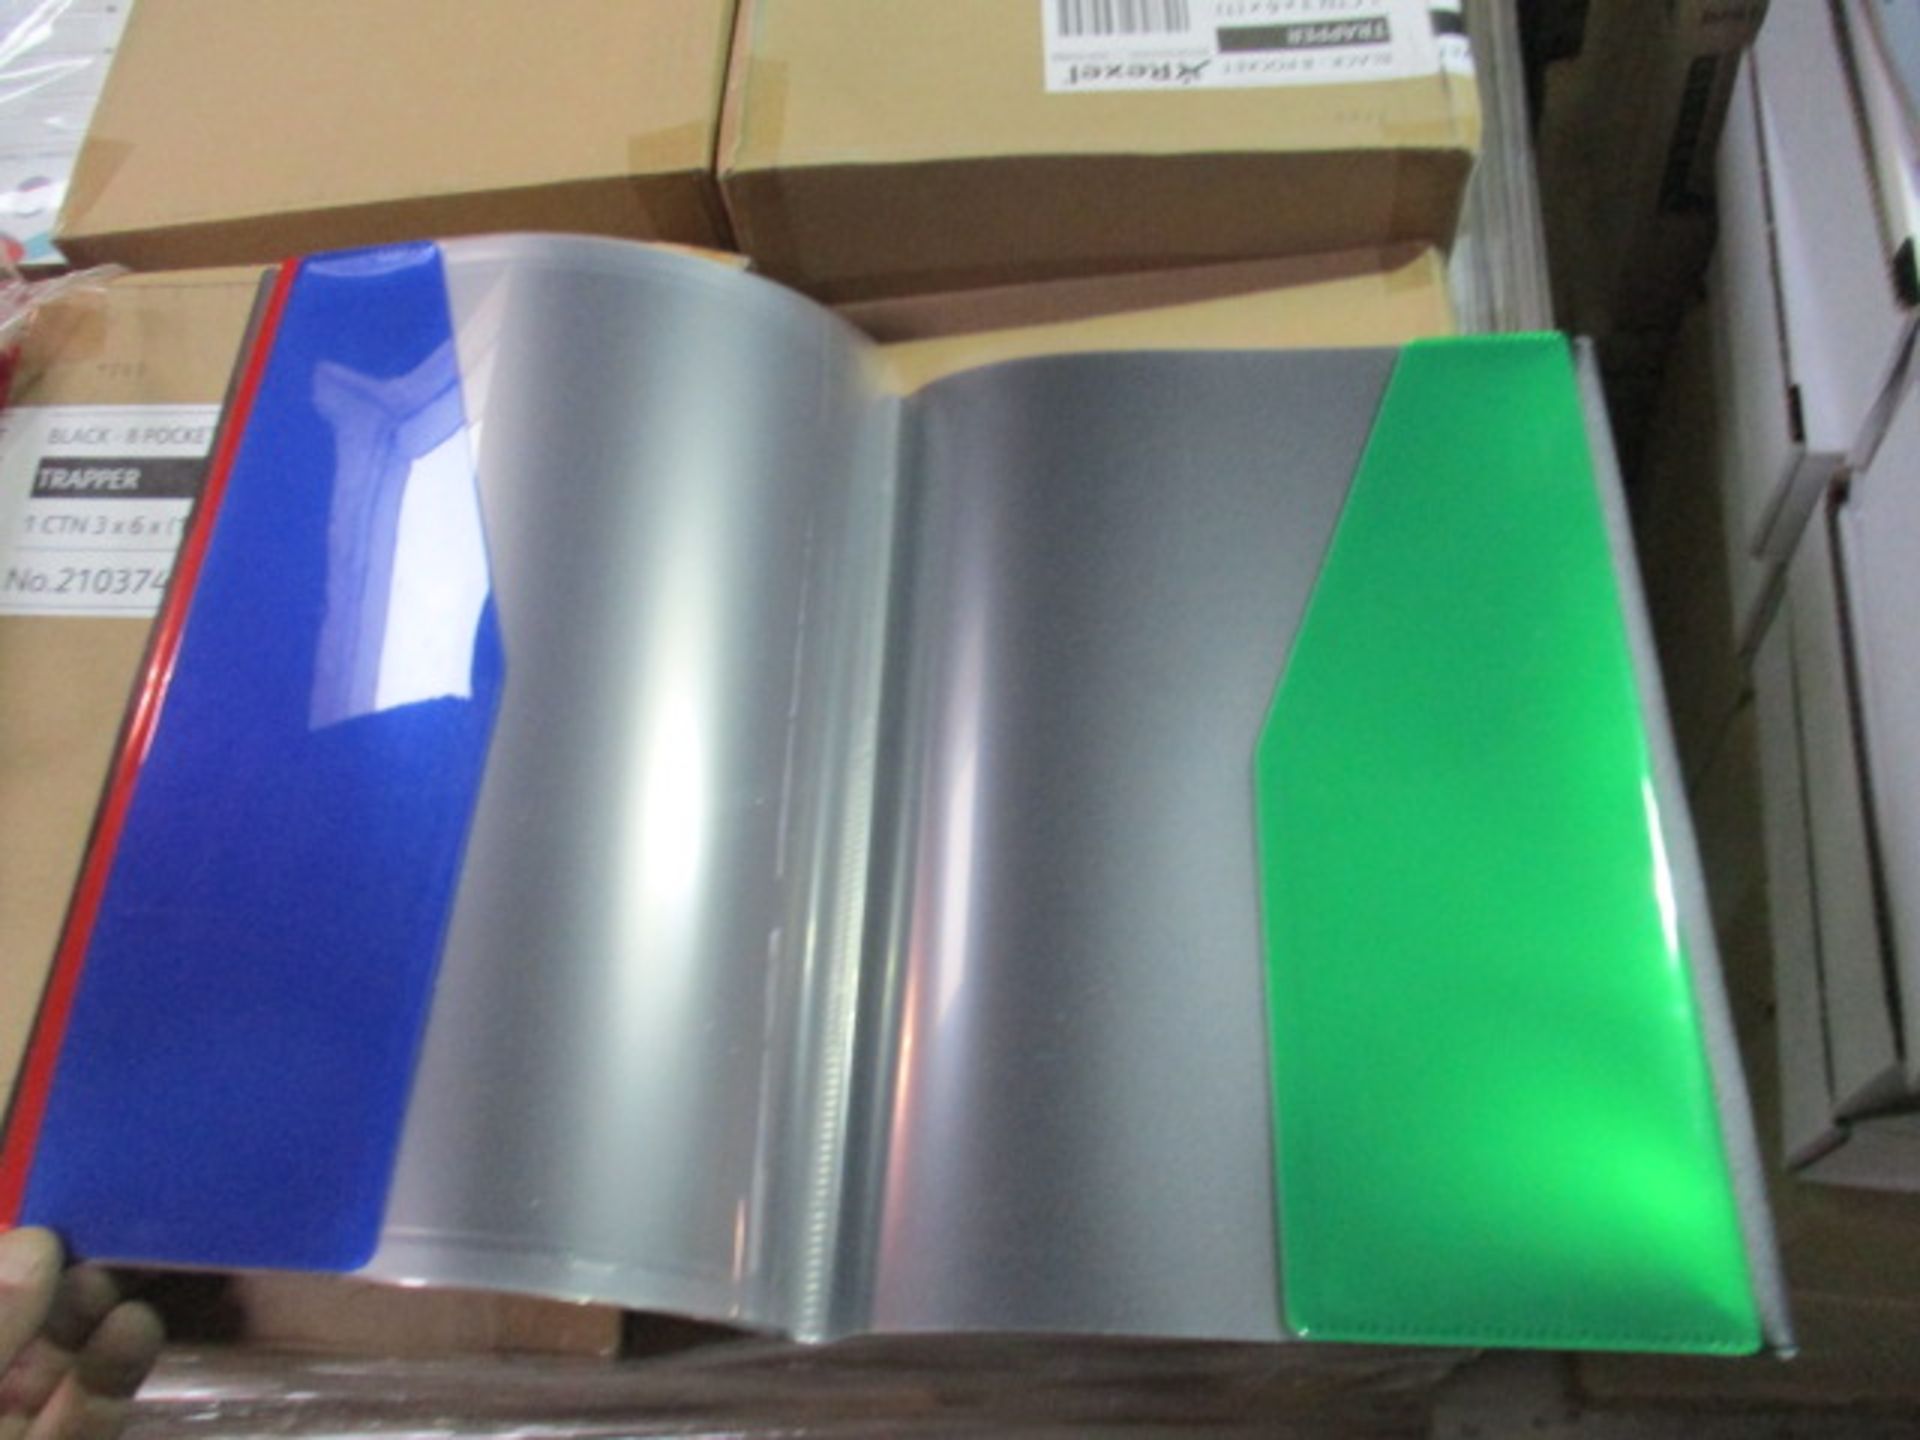 126 pcs Rexel Brand new Sealed Trapper folder system - Image 4 of 6